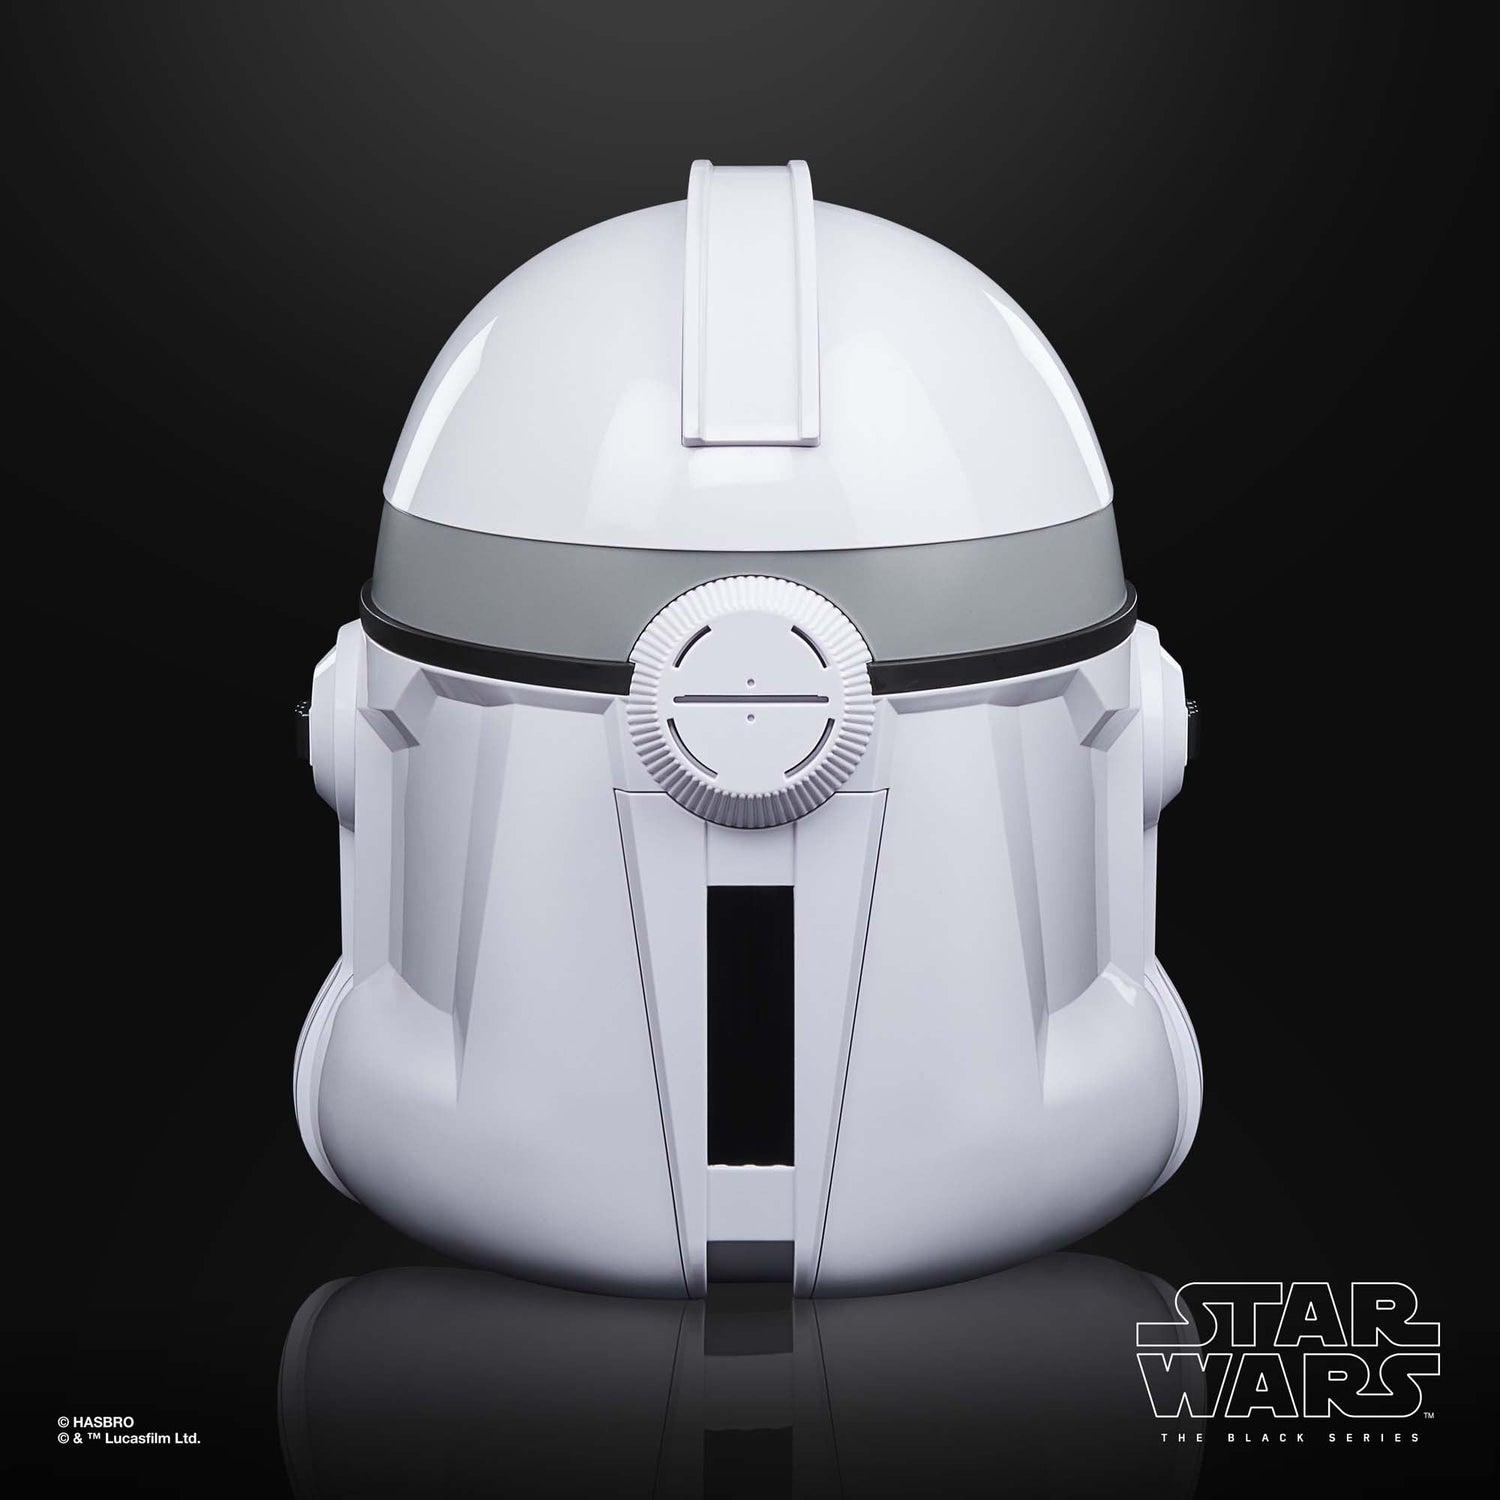 Star Wars: The Black Series Phase II Clone Trooper Premium Electronic Helmet Hasbro